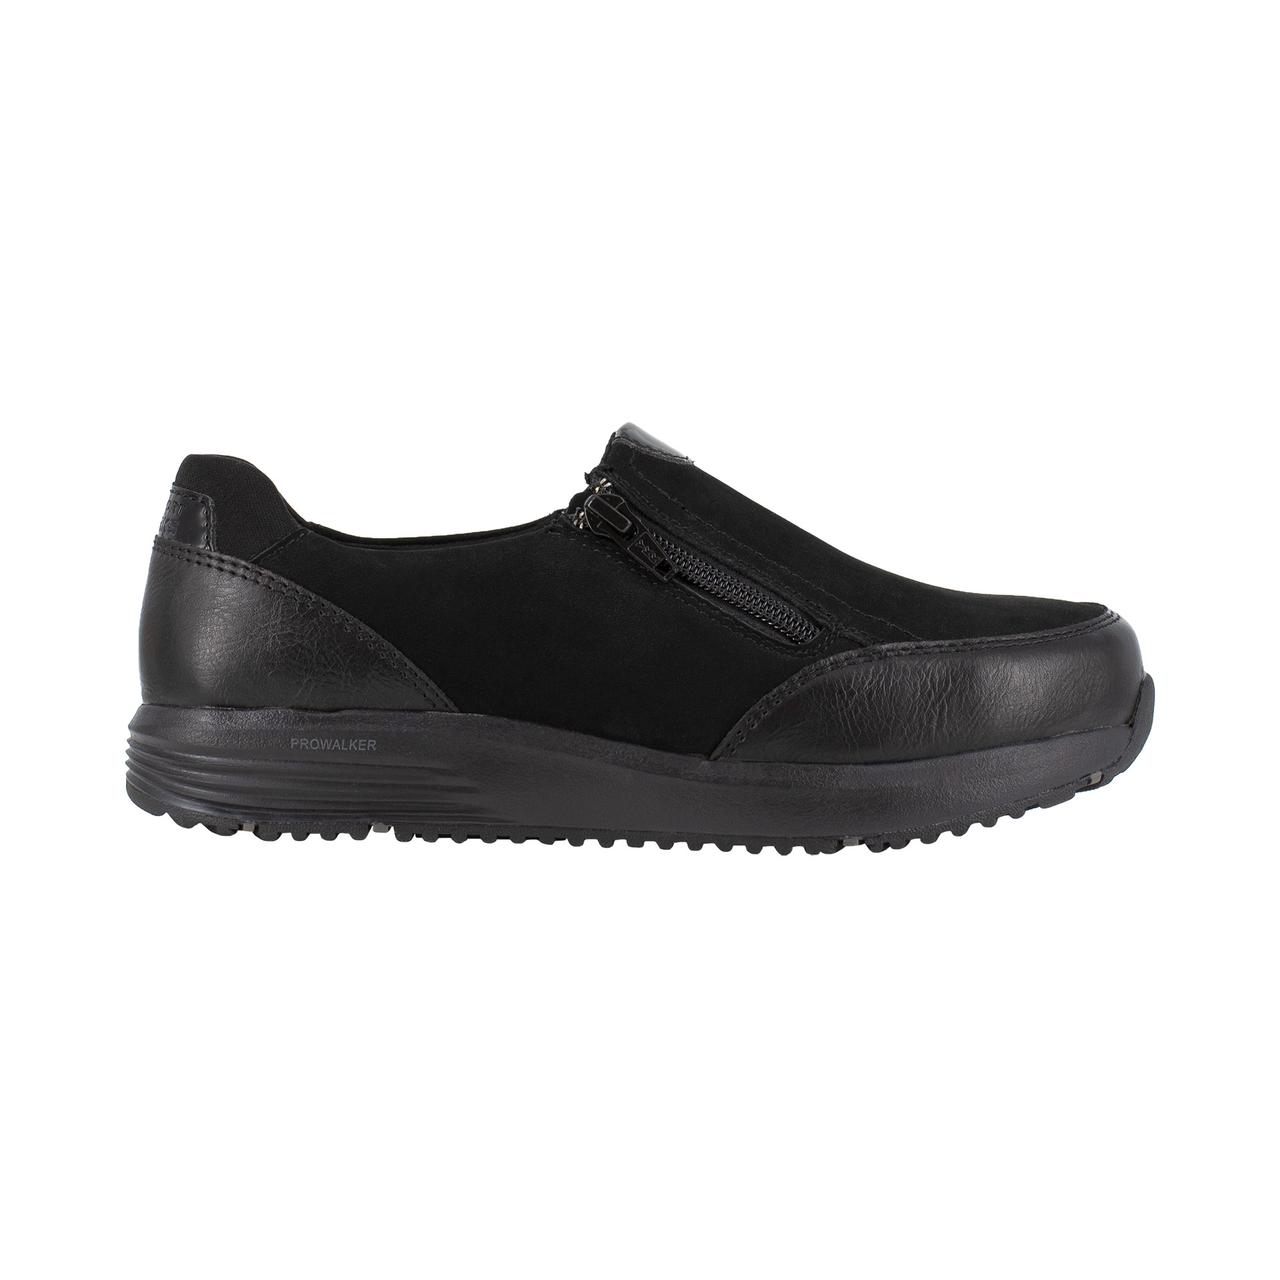 Rockport truStride Work - RK500 - Women's Slip On Oxford Shoes